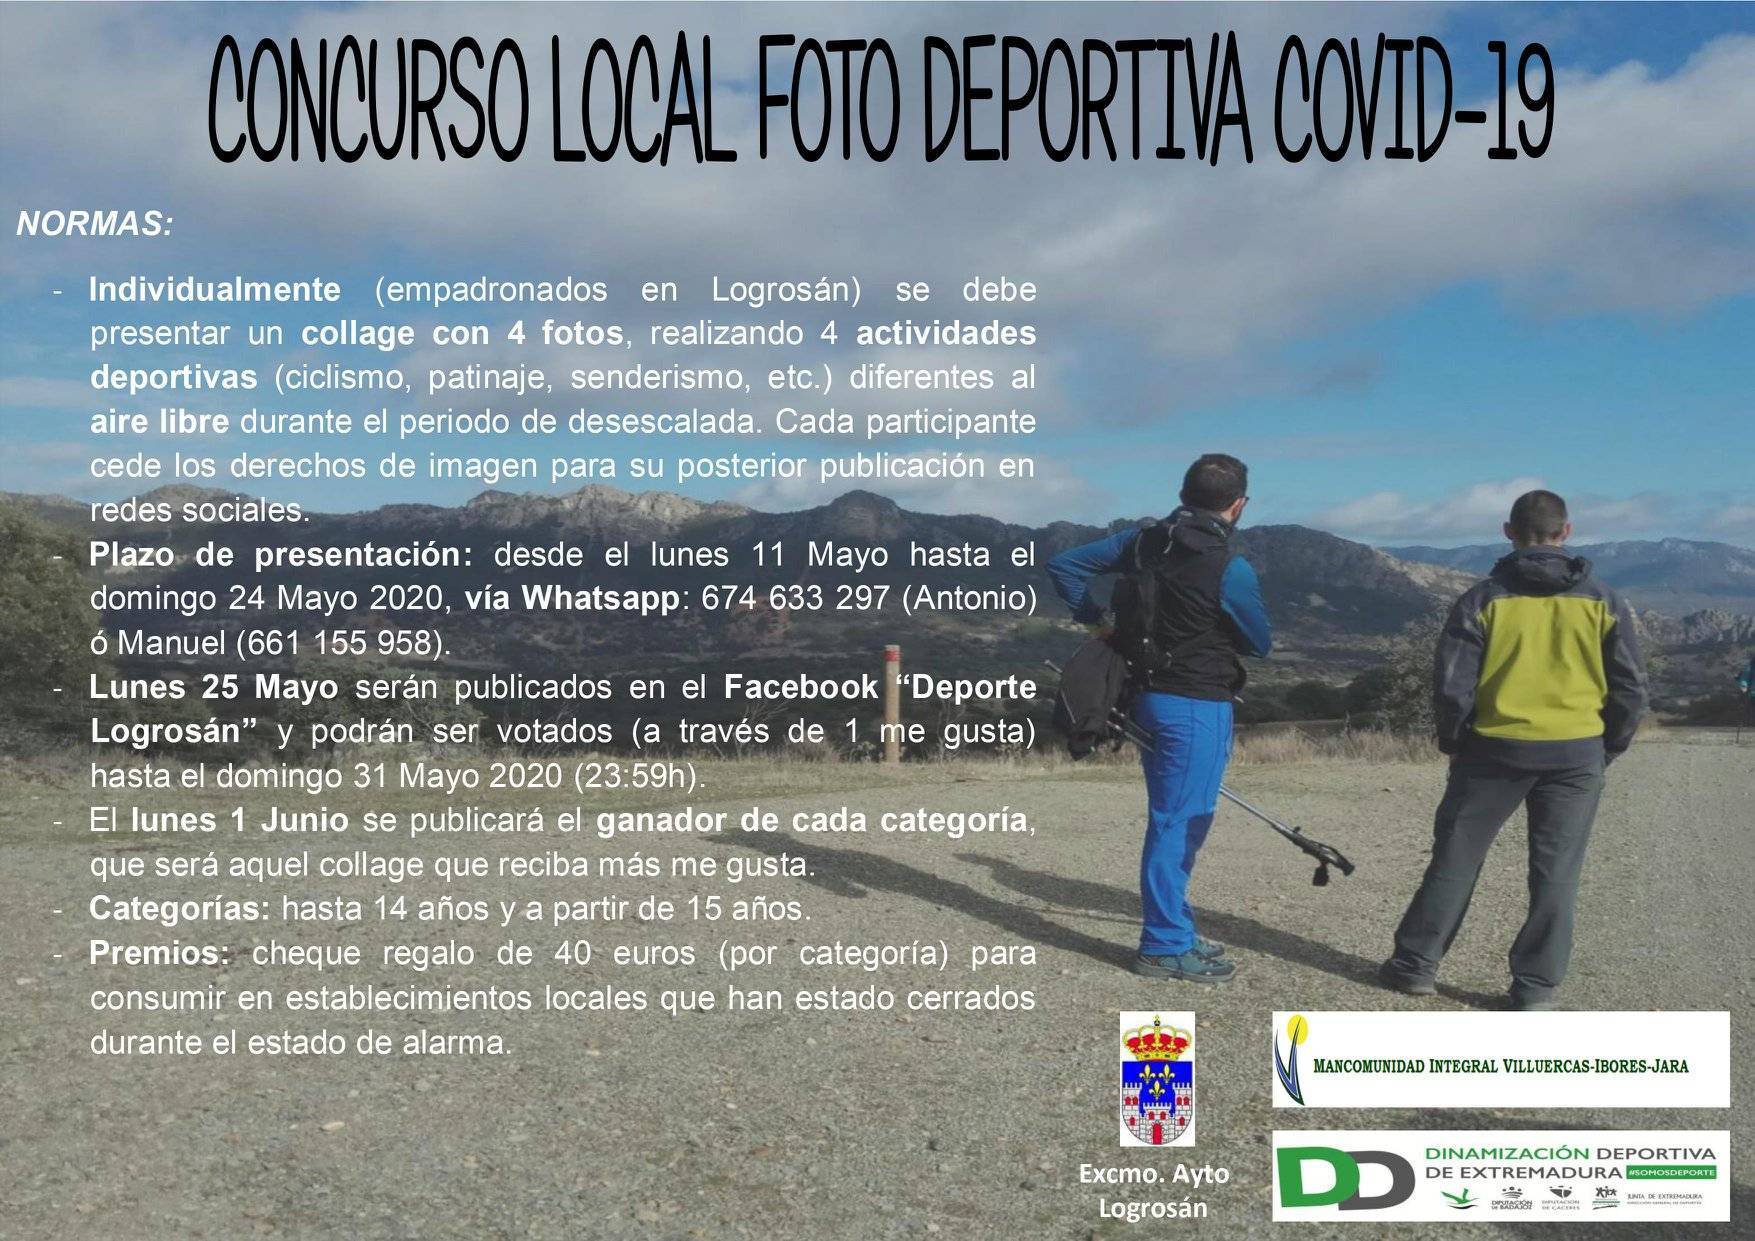 Concurso local de foto deportiva COVID-19 2020 - Logrosán (Cáceres)